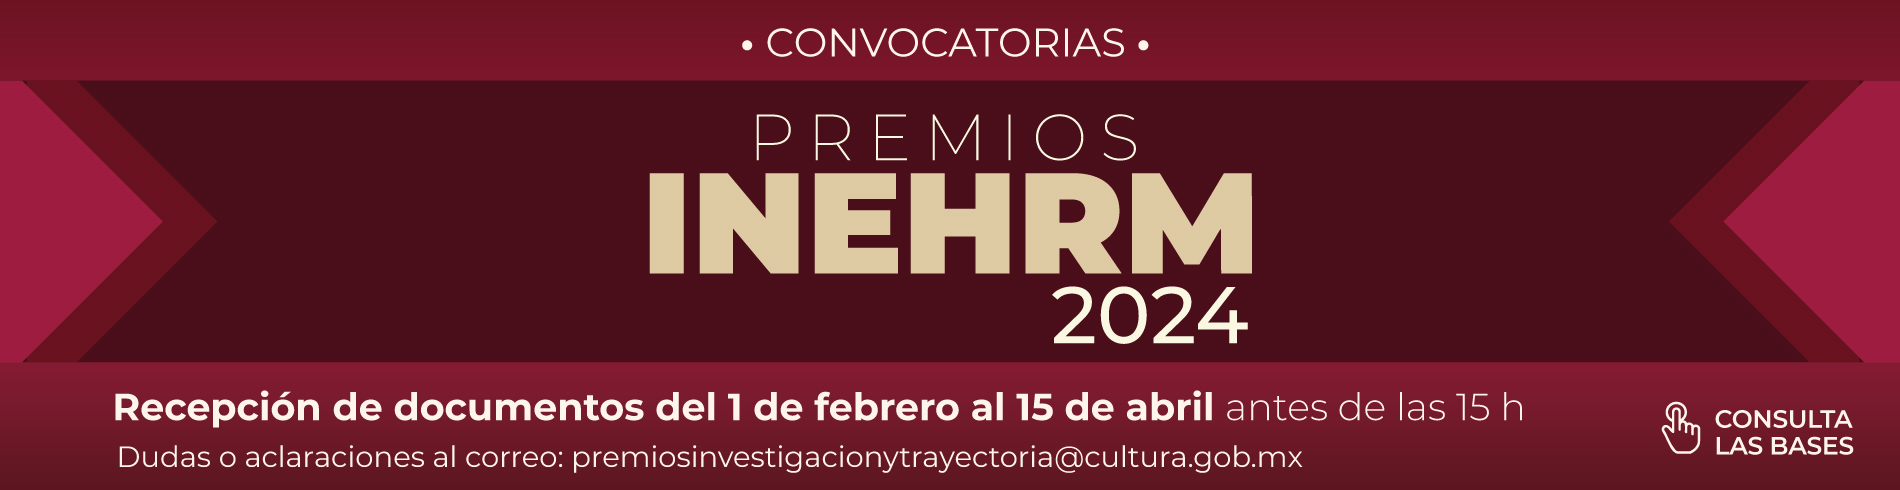 premios INEHRM 2024